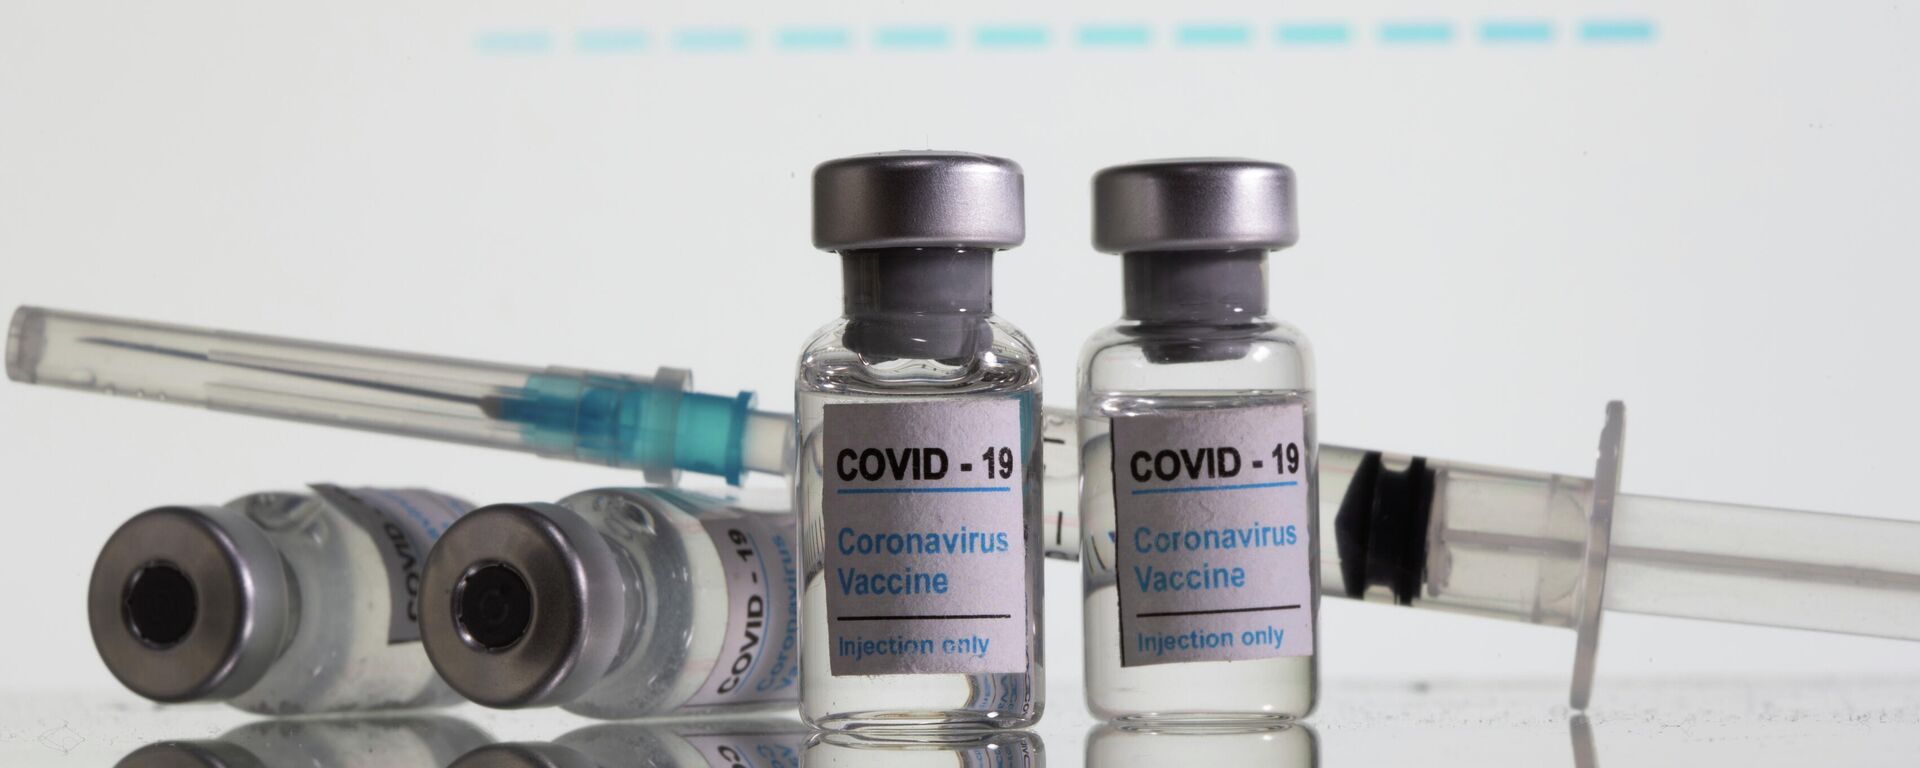 Viales de vacuna de Moderna contra el COVID-19 - Sputnik Mundo, 1920, 30.11.2021